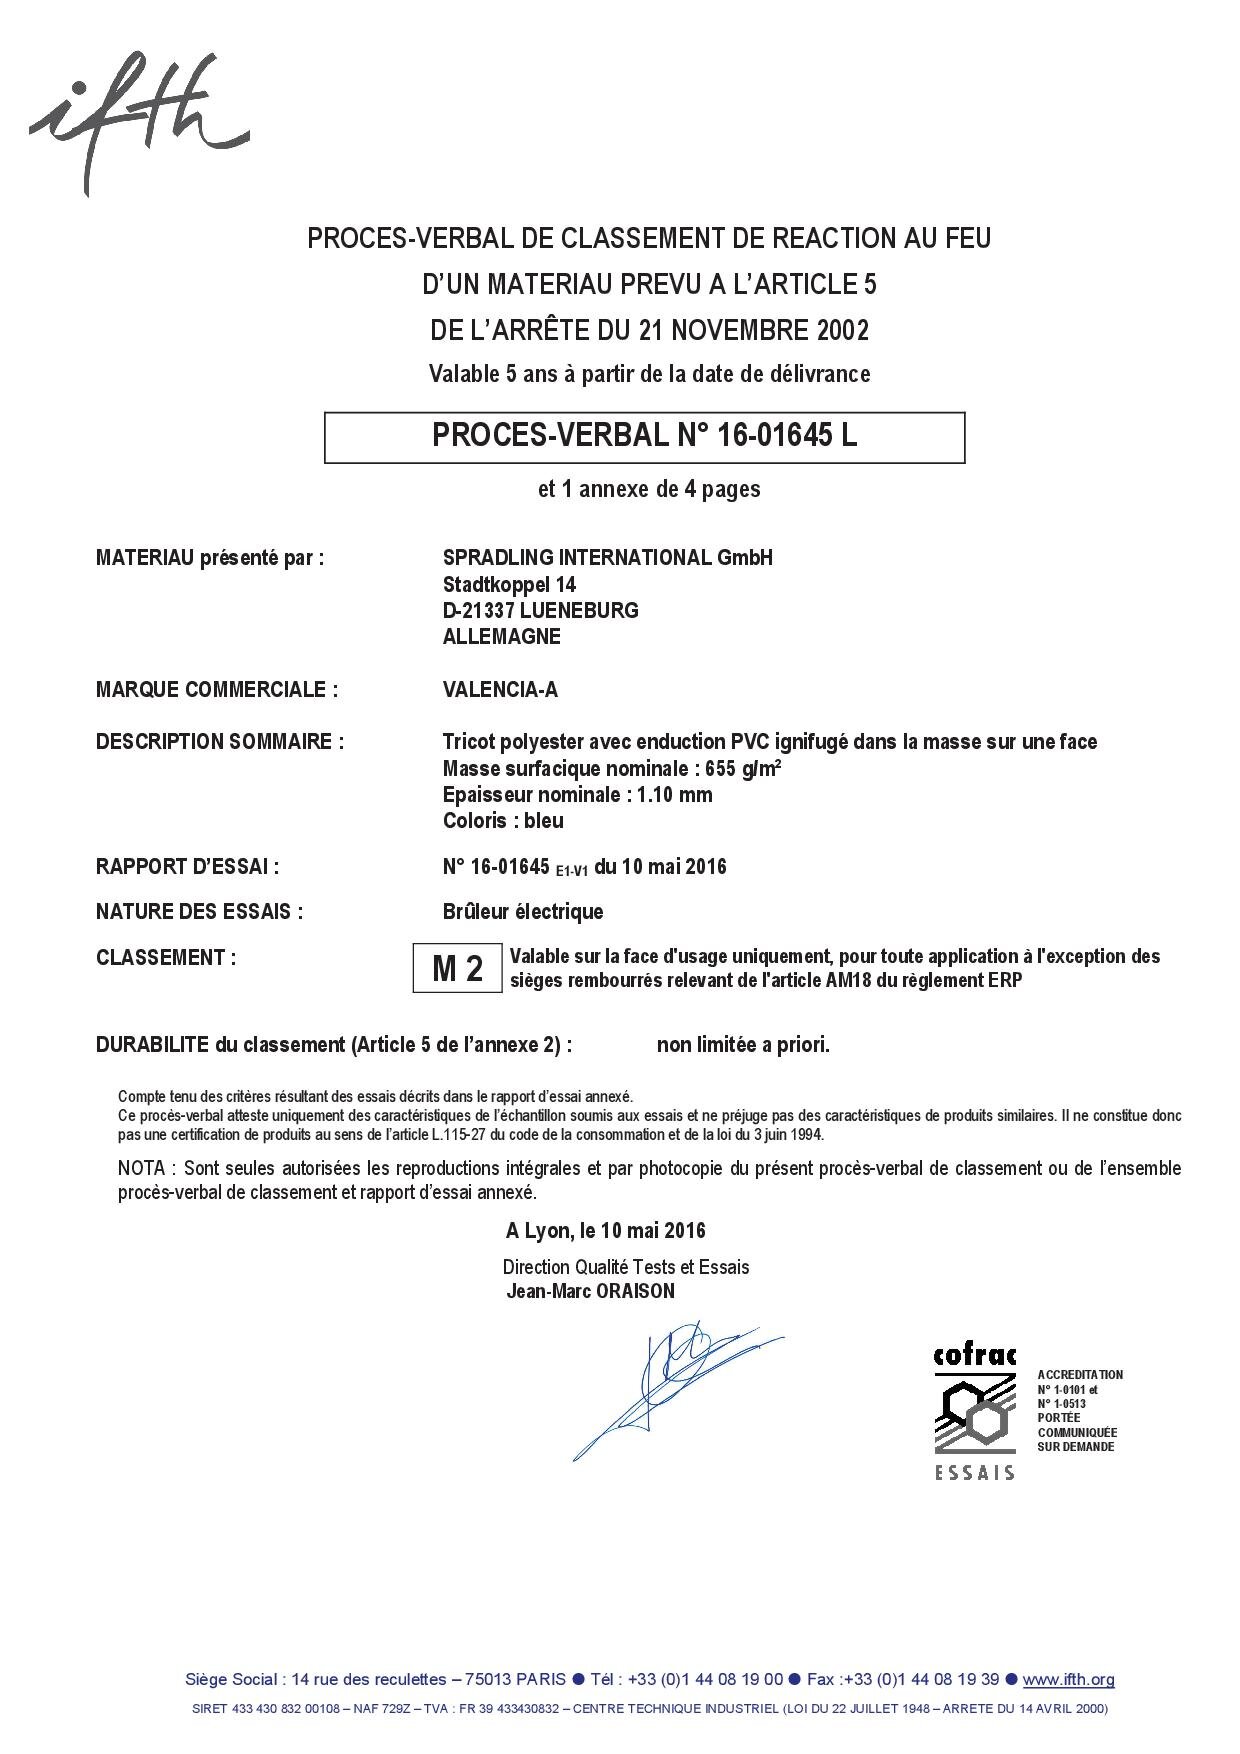 Valencia certificat M2 2016